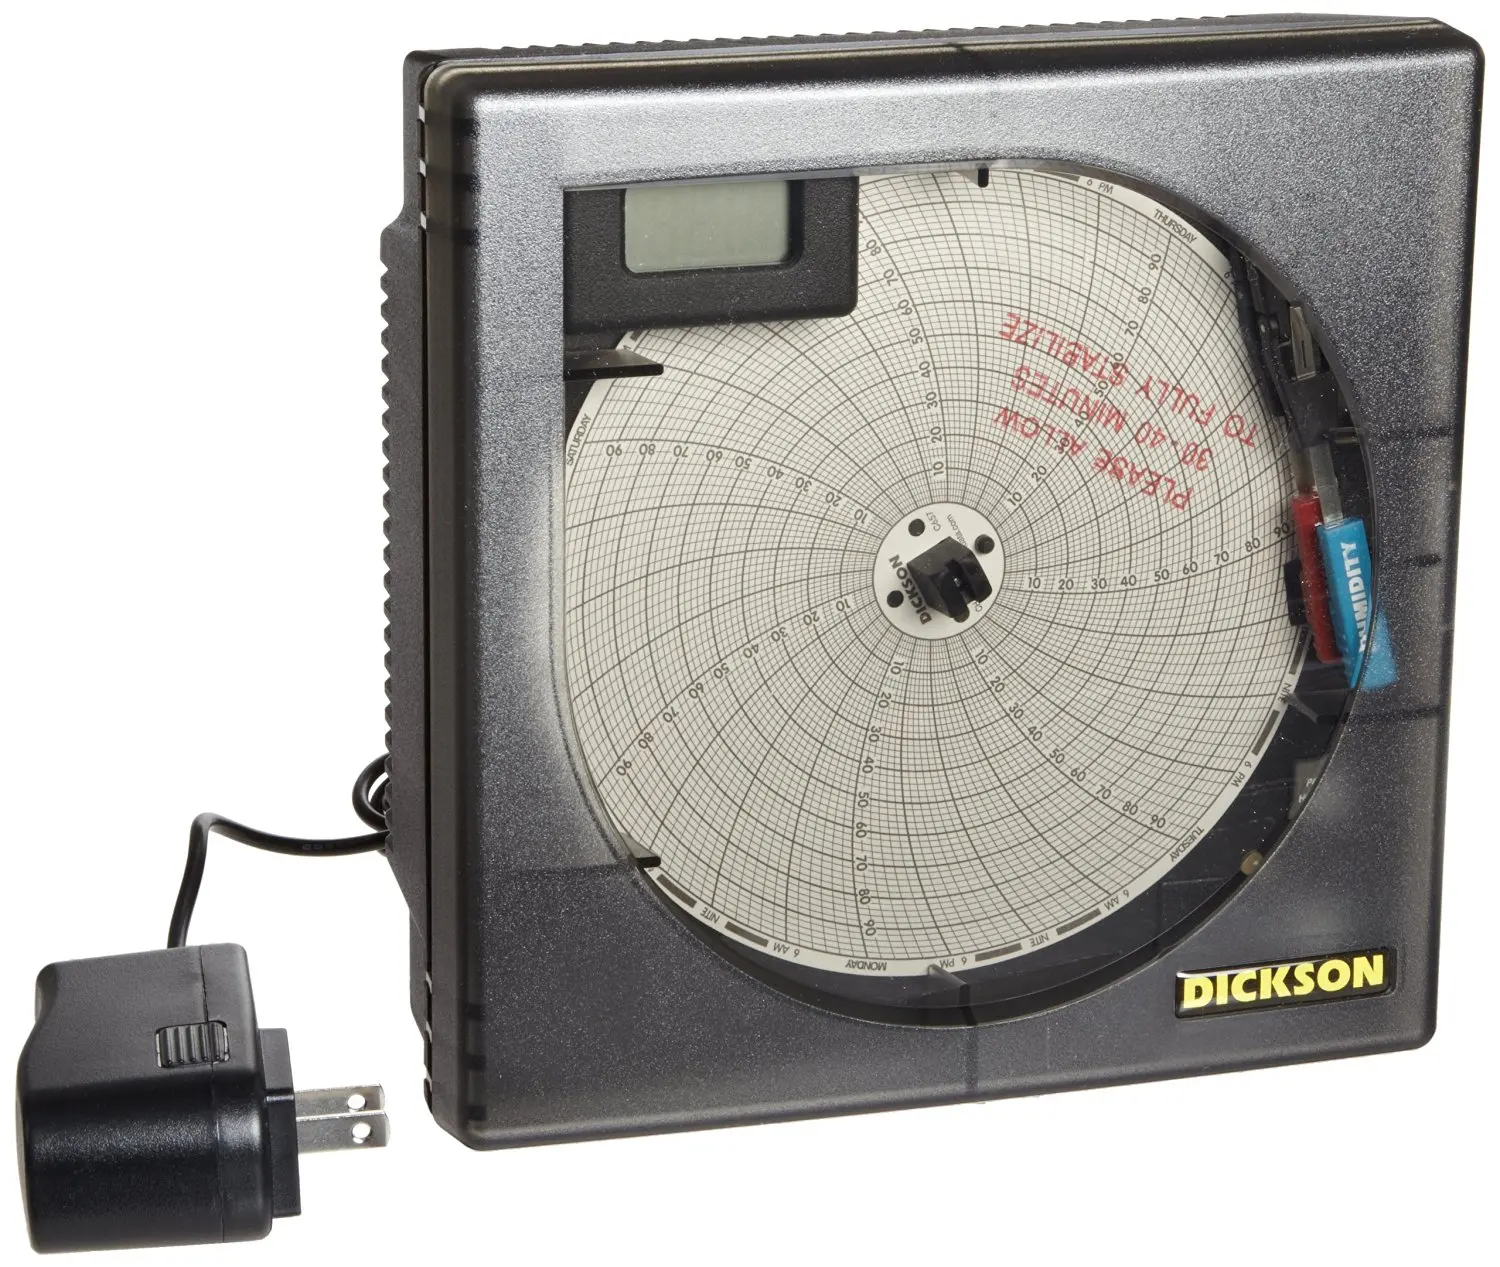 Dickson Chart Recorder Thdx